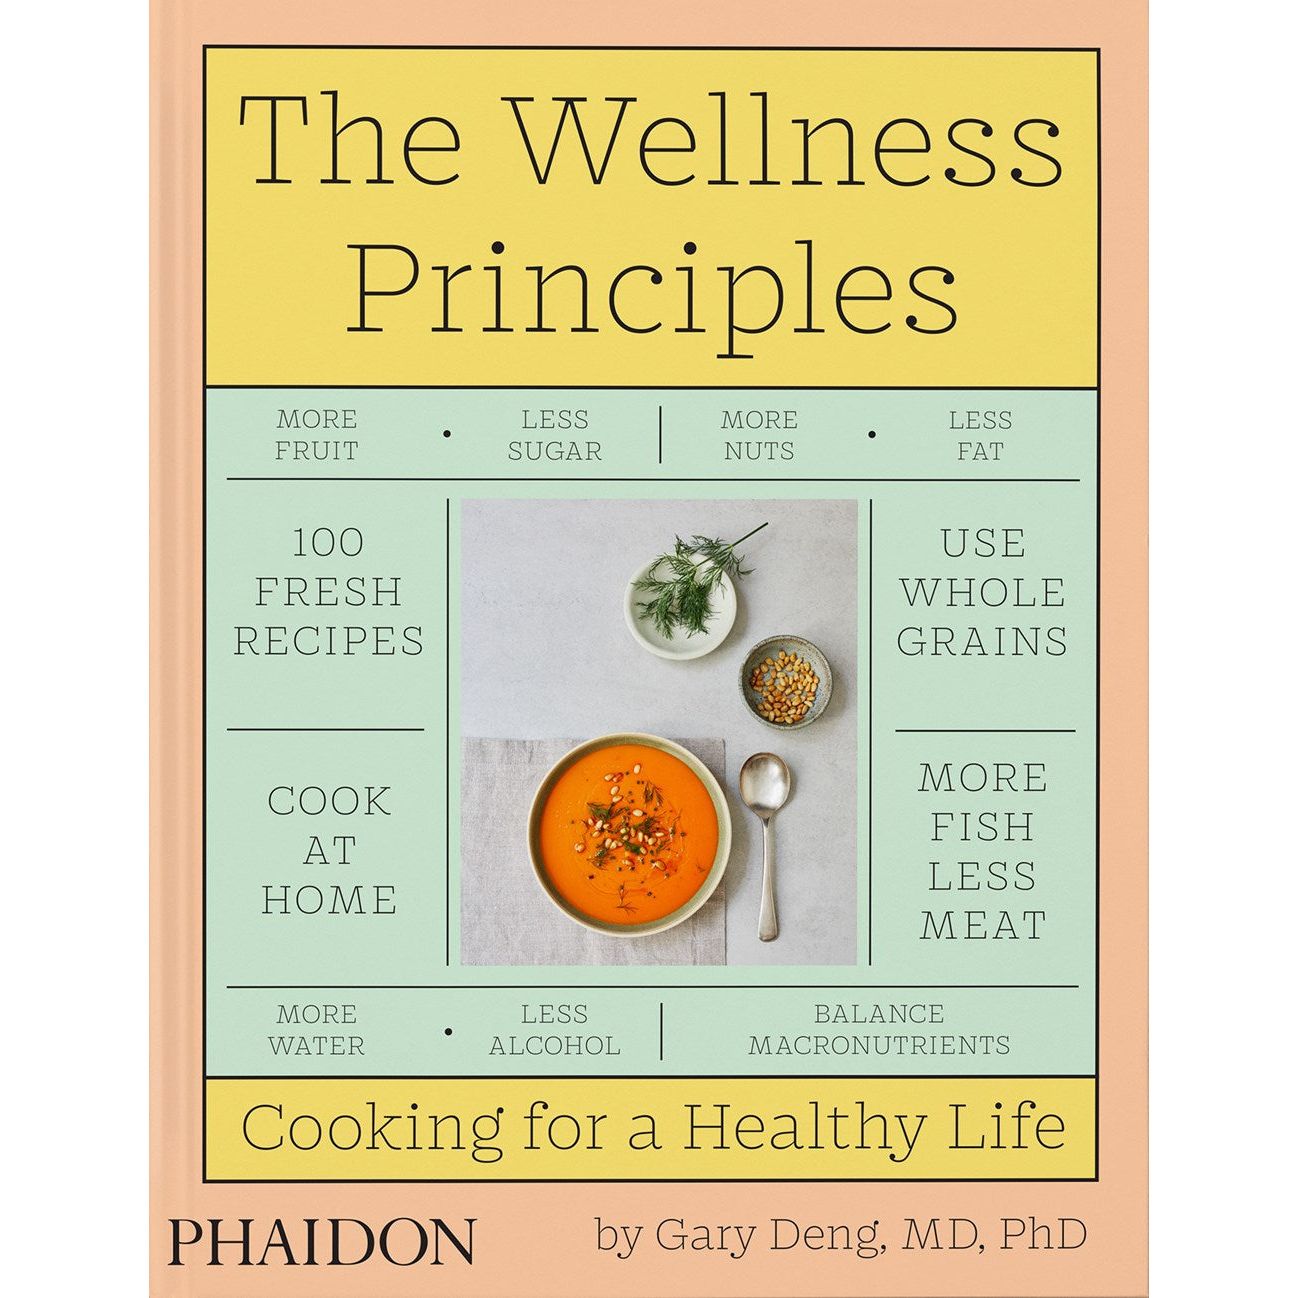 The Wellness Principles (Gary Deng)